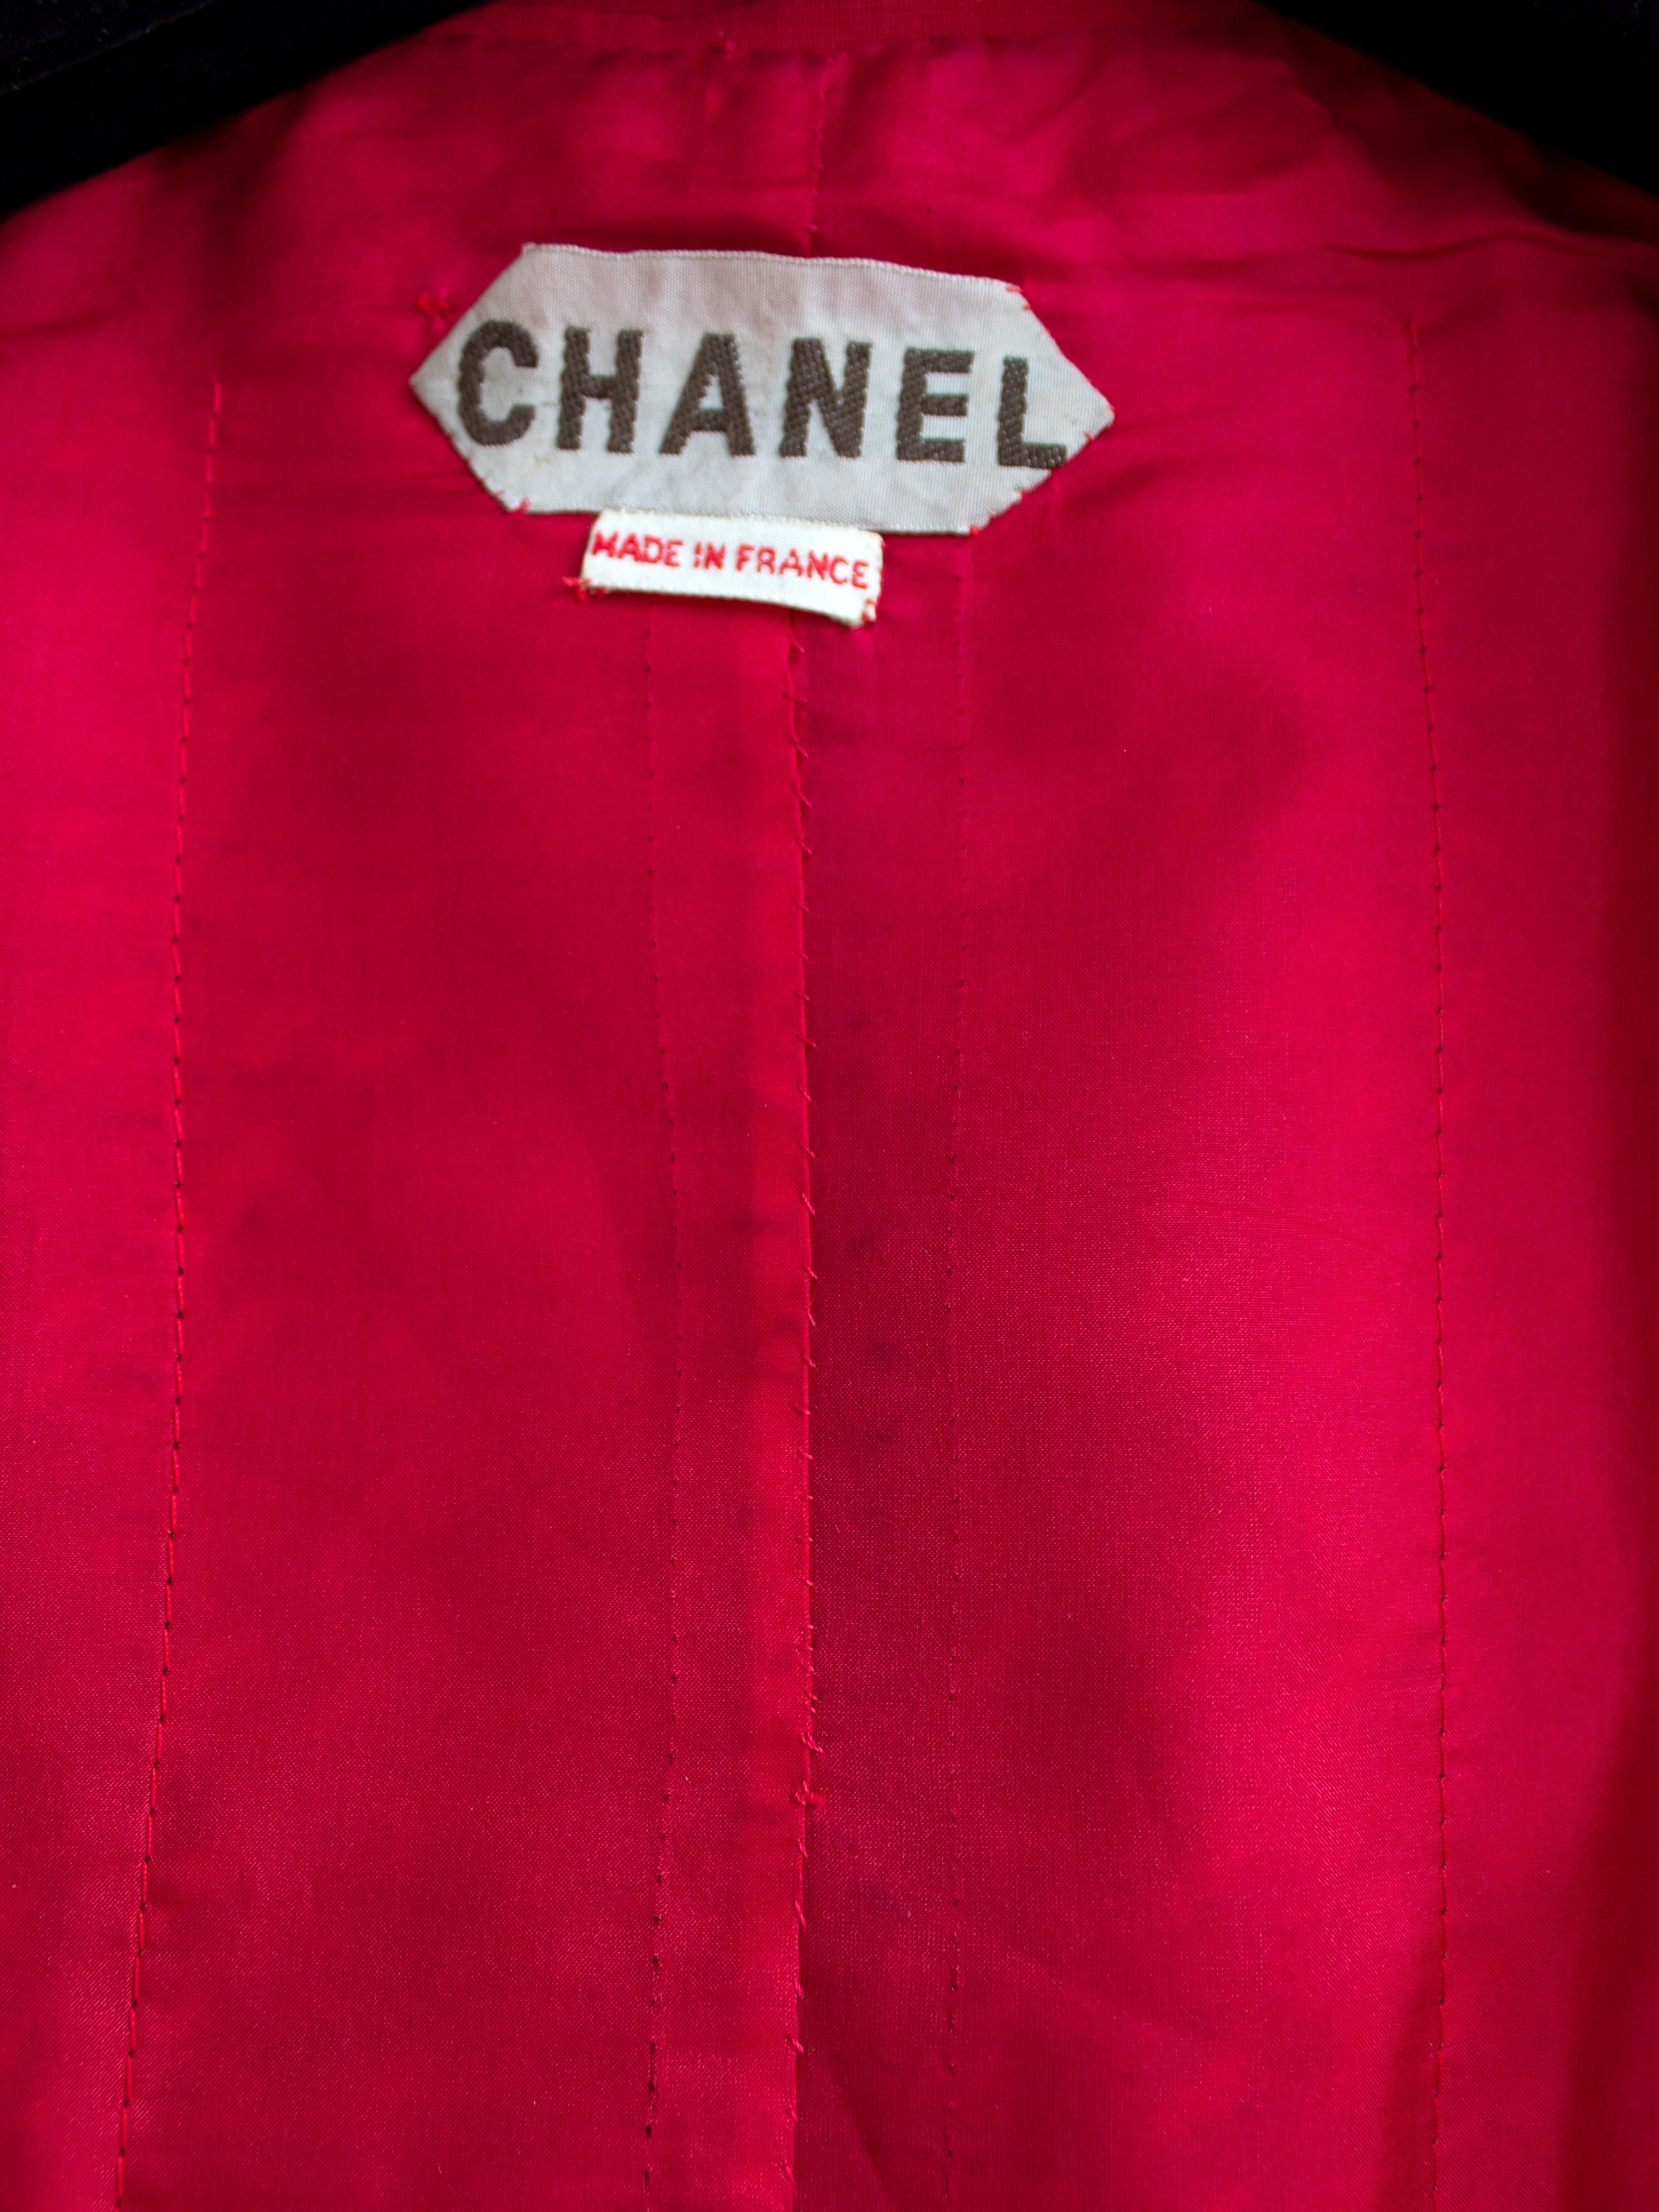 Chanel Vintage Haute Couture 1970s Red Blue Gold Lion Jacket Skirt Suit 6